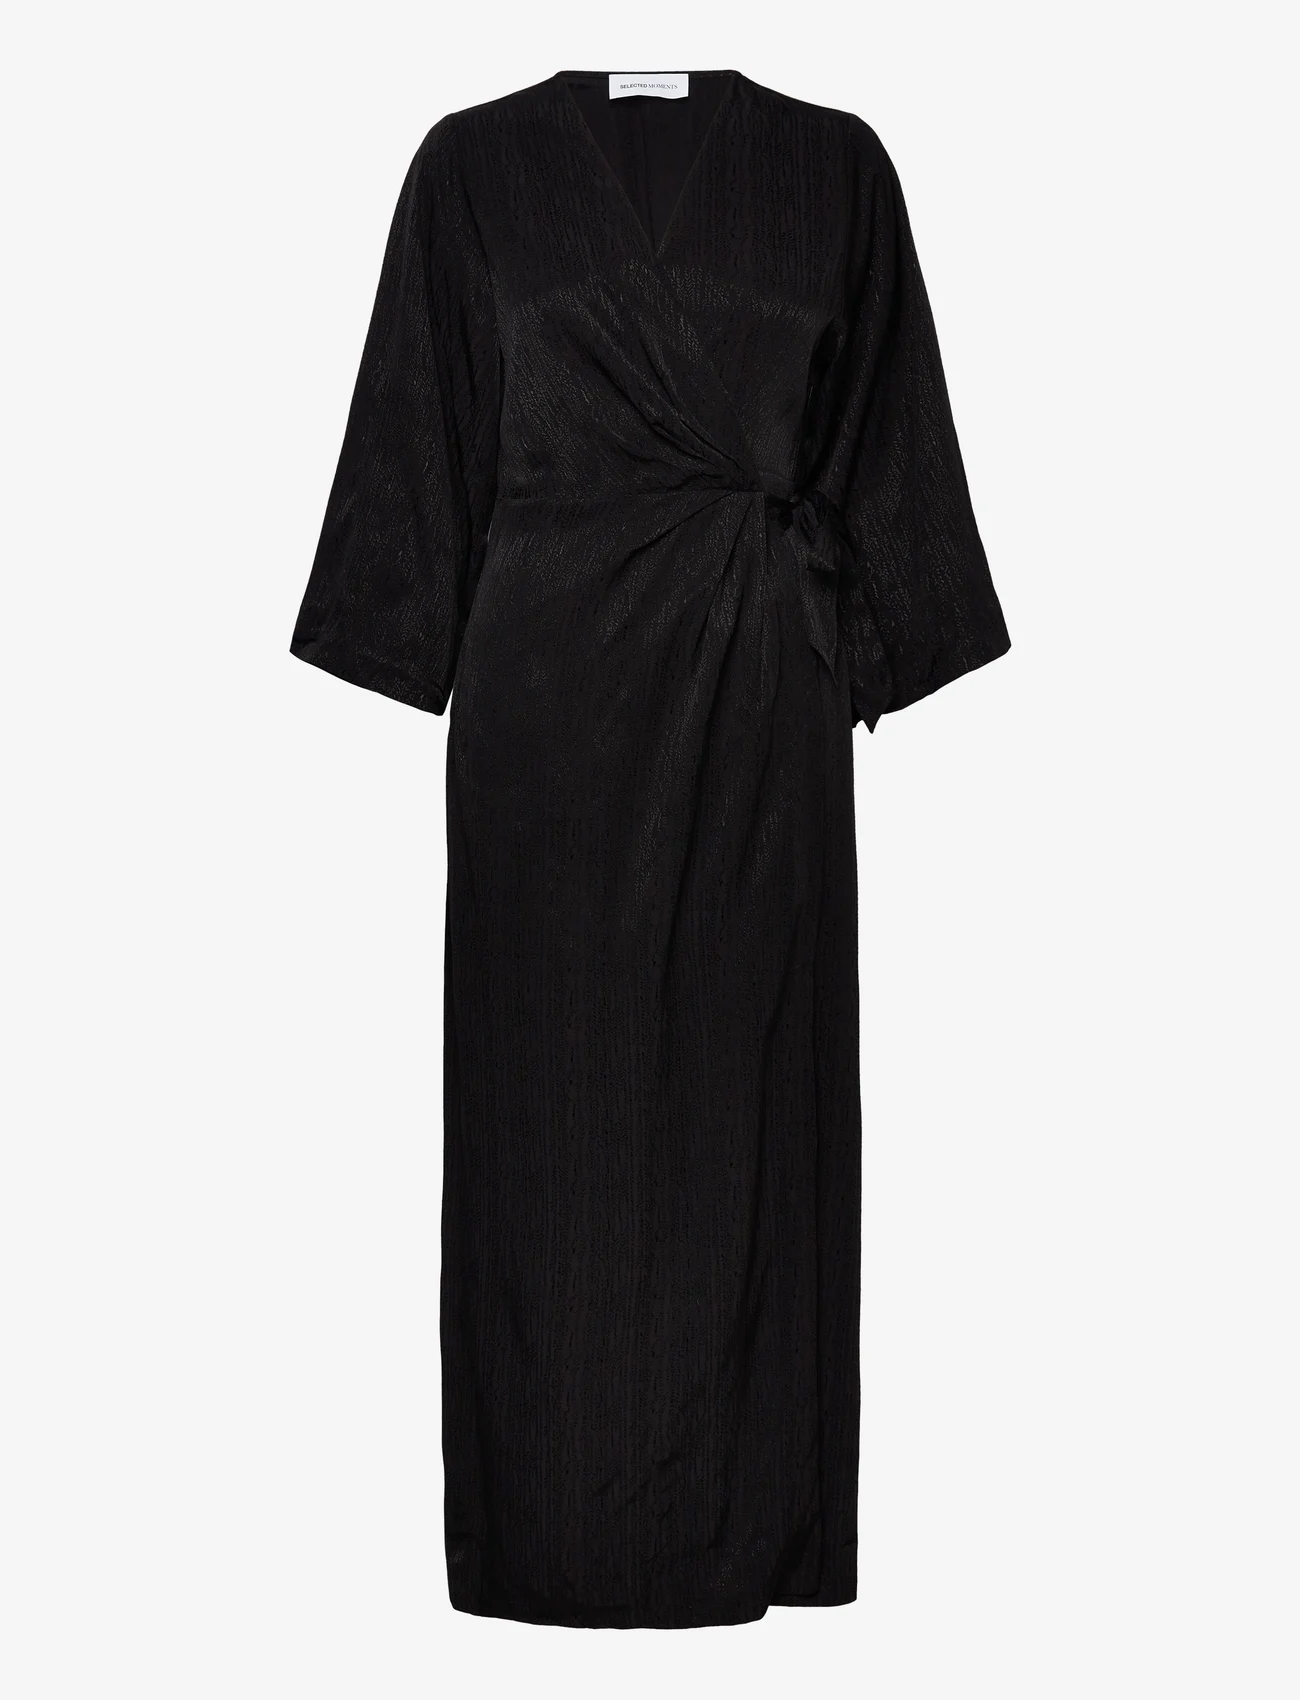 Selected Femme - SLFTYRA 34 ANKLE WRAP DRESS B - wrap dresses - black - 0